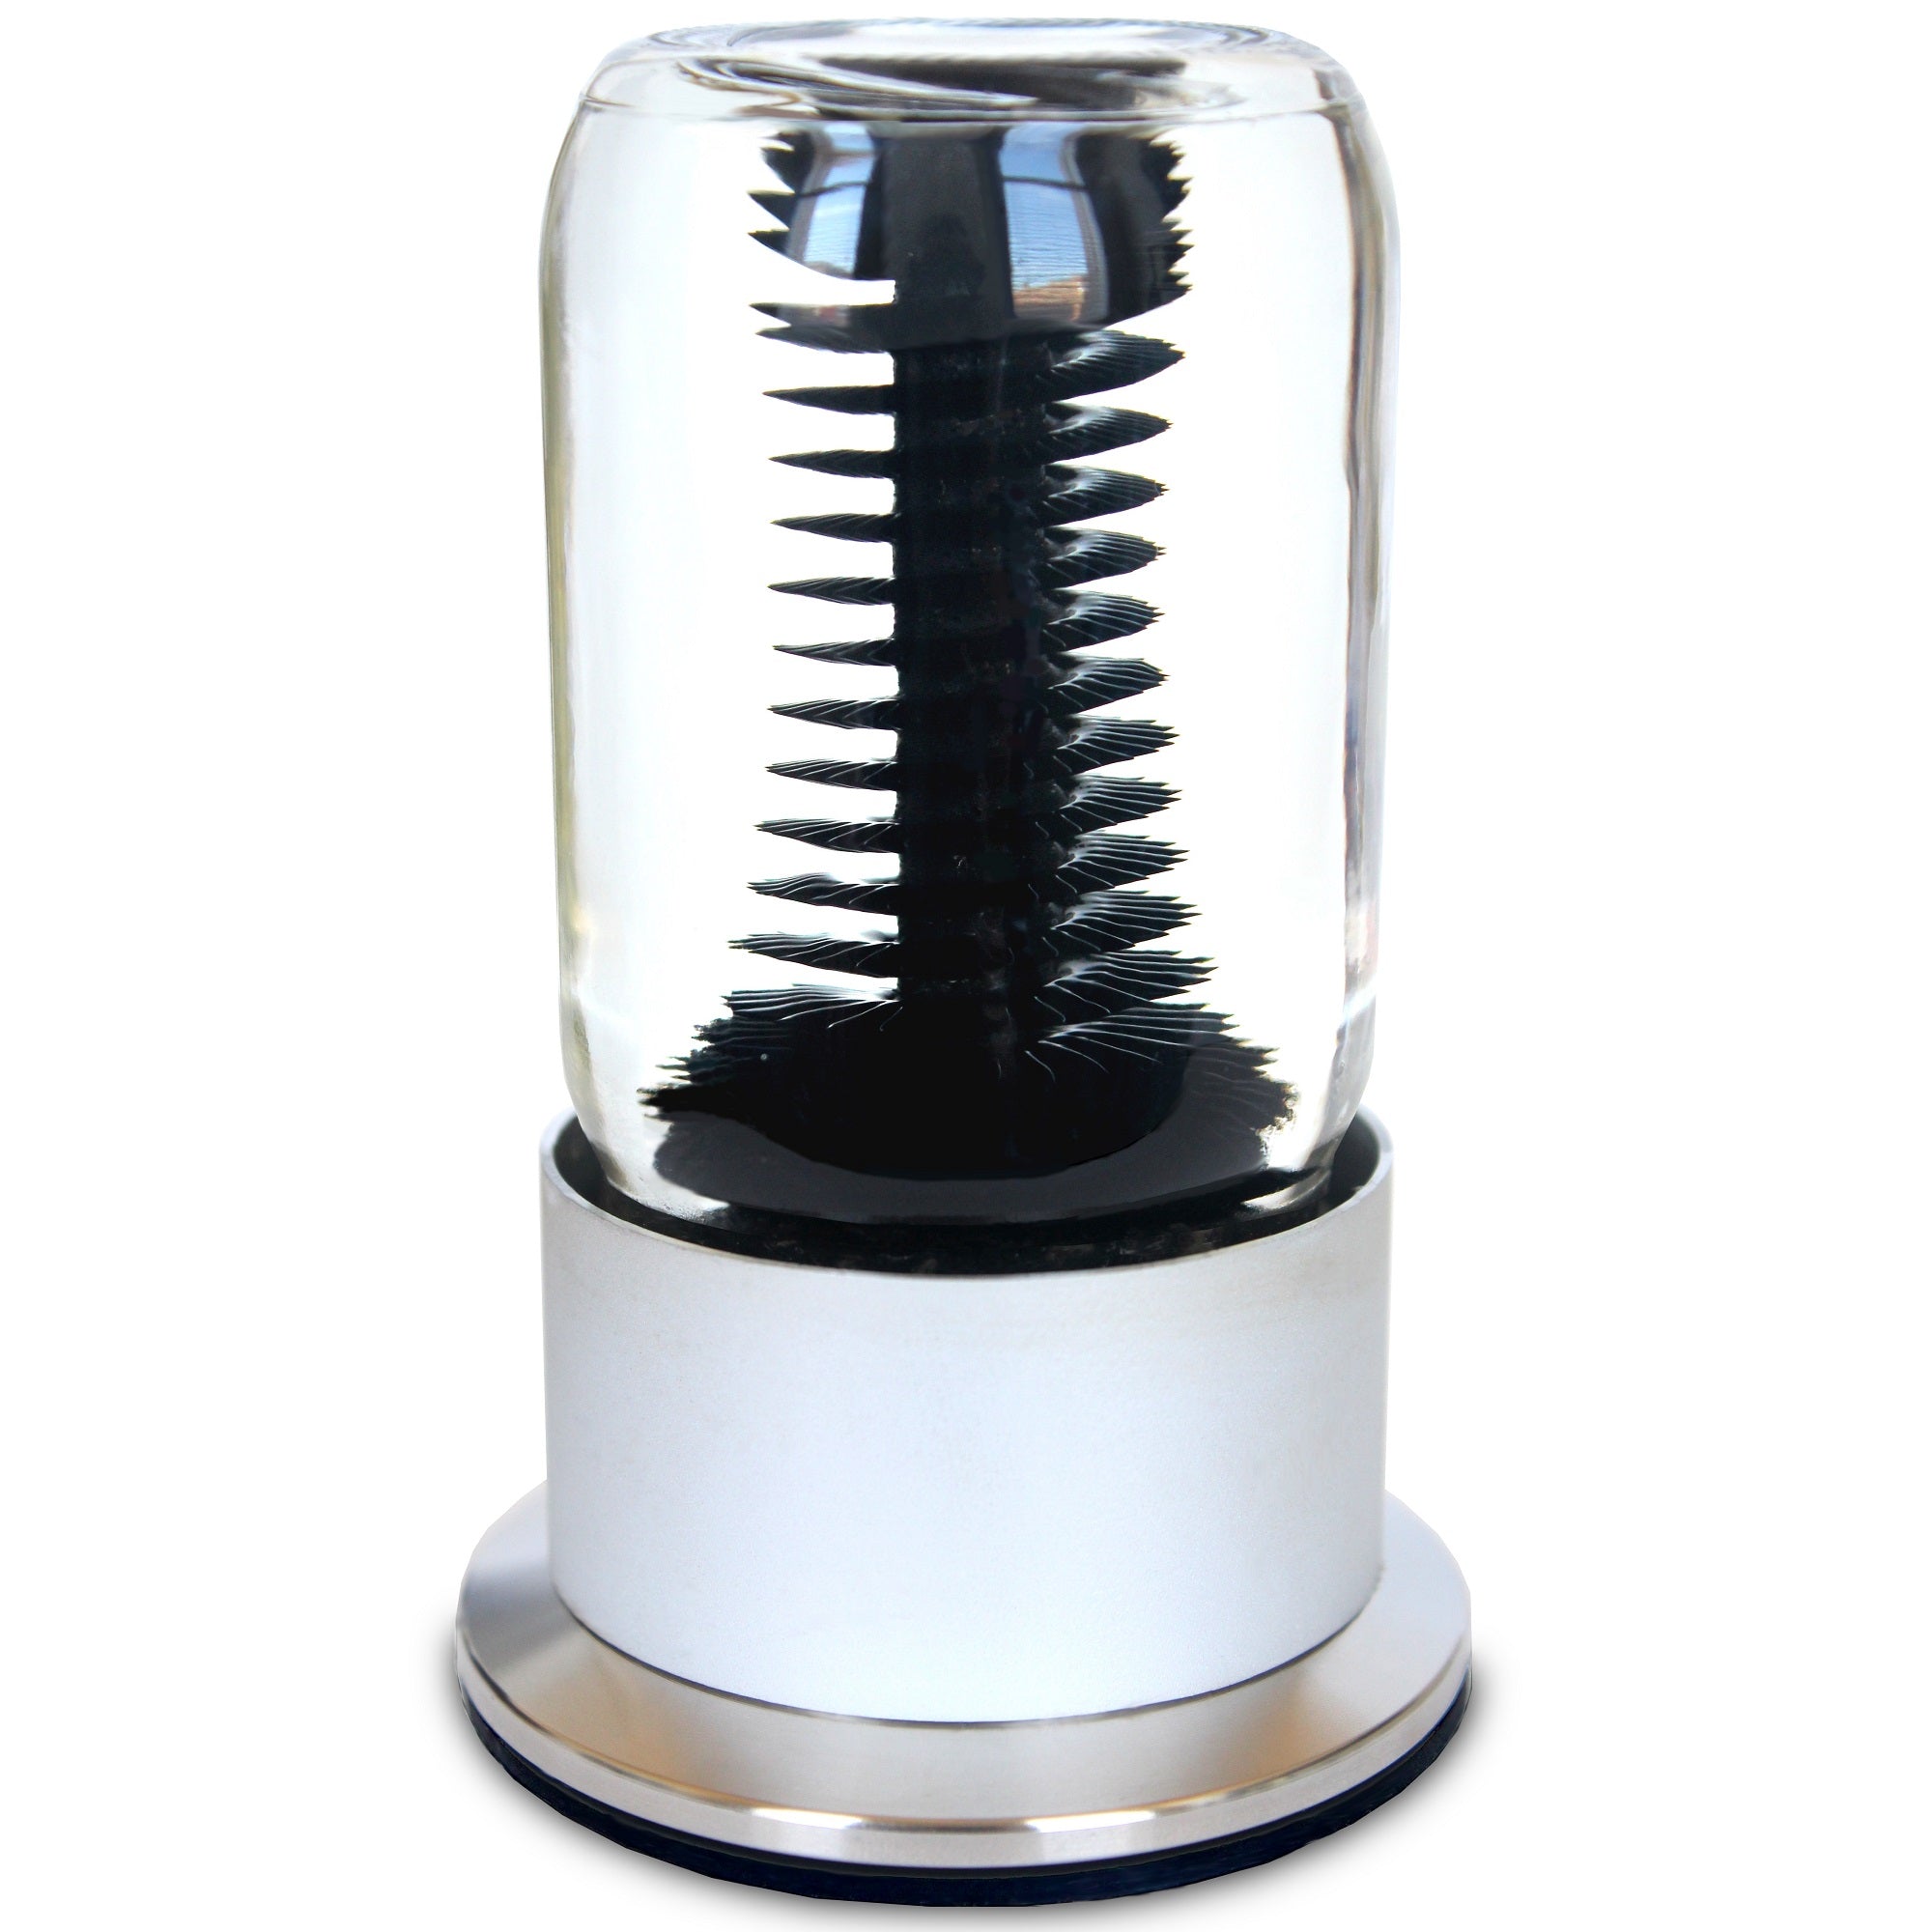 ferrofluid toy